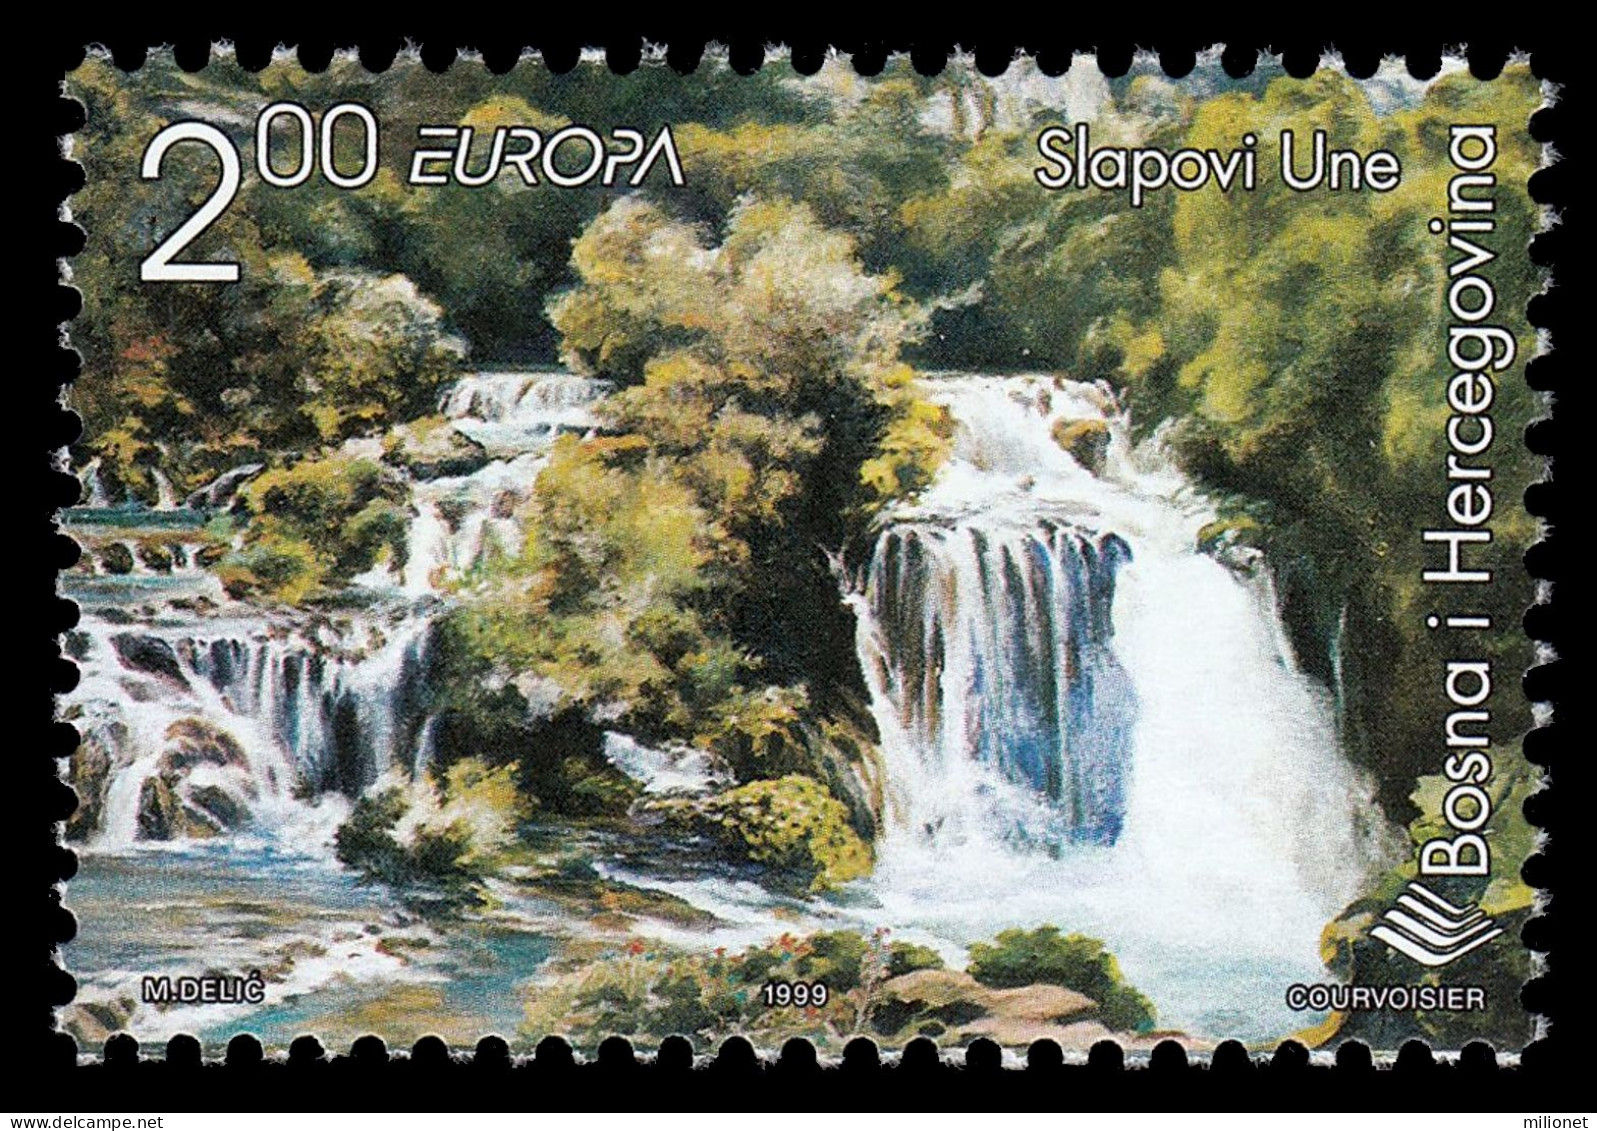 SALE!!! BOSNIA HERZEGOVINA MAIN POST (SARAJEVO) 1999 EUROPA CEPT National Reserves & Parks 1 Stamp Set MNH ** - 1999